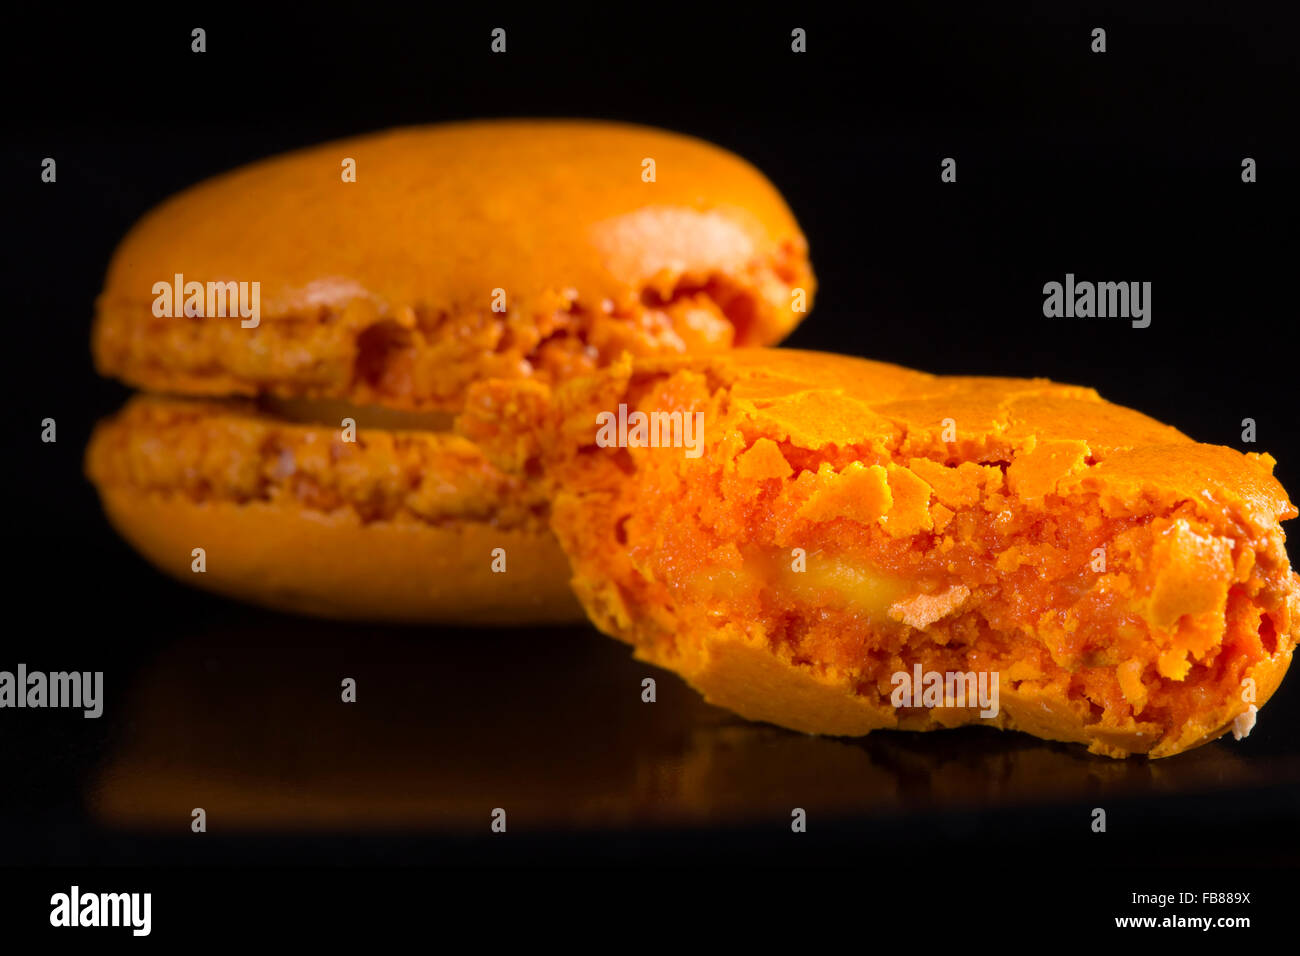 Closeup a bitten orange macaroon on a black background Stock Photo